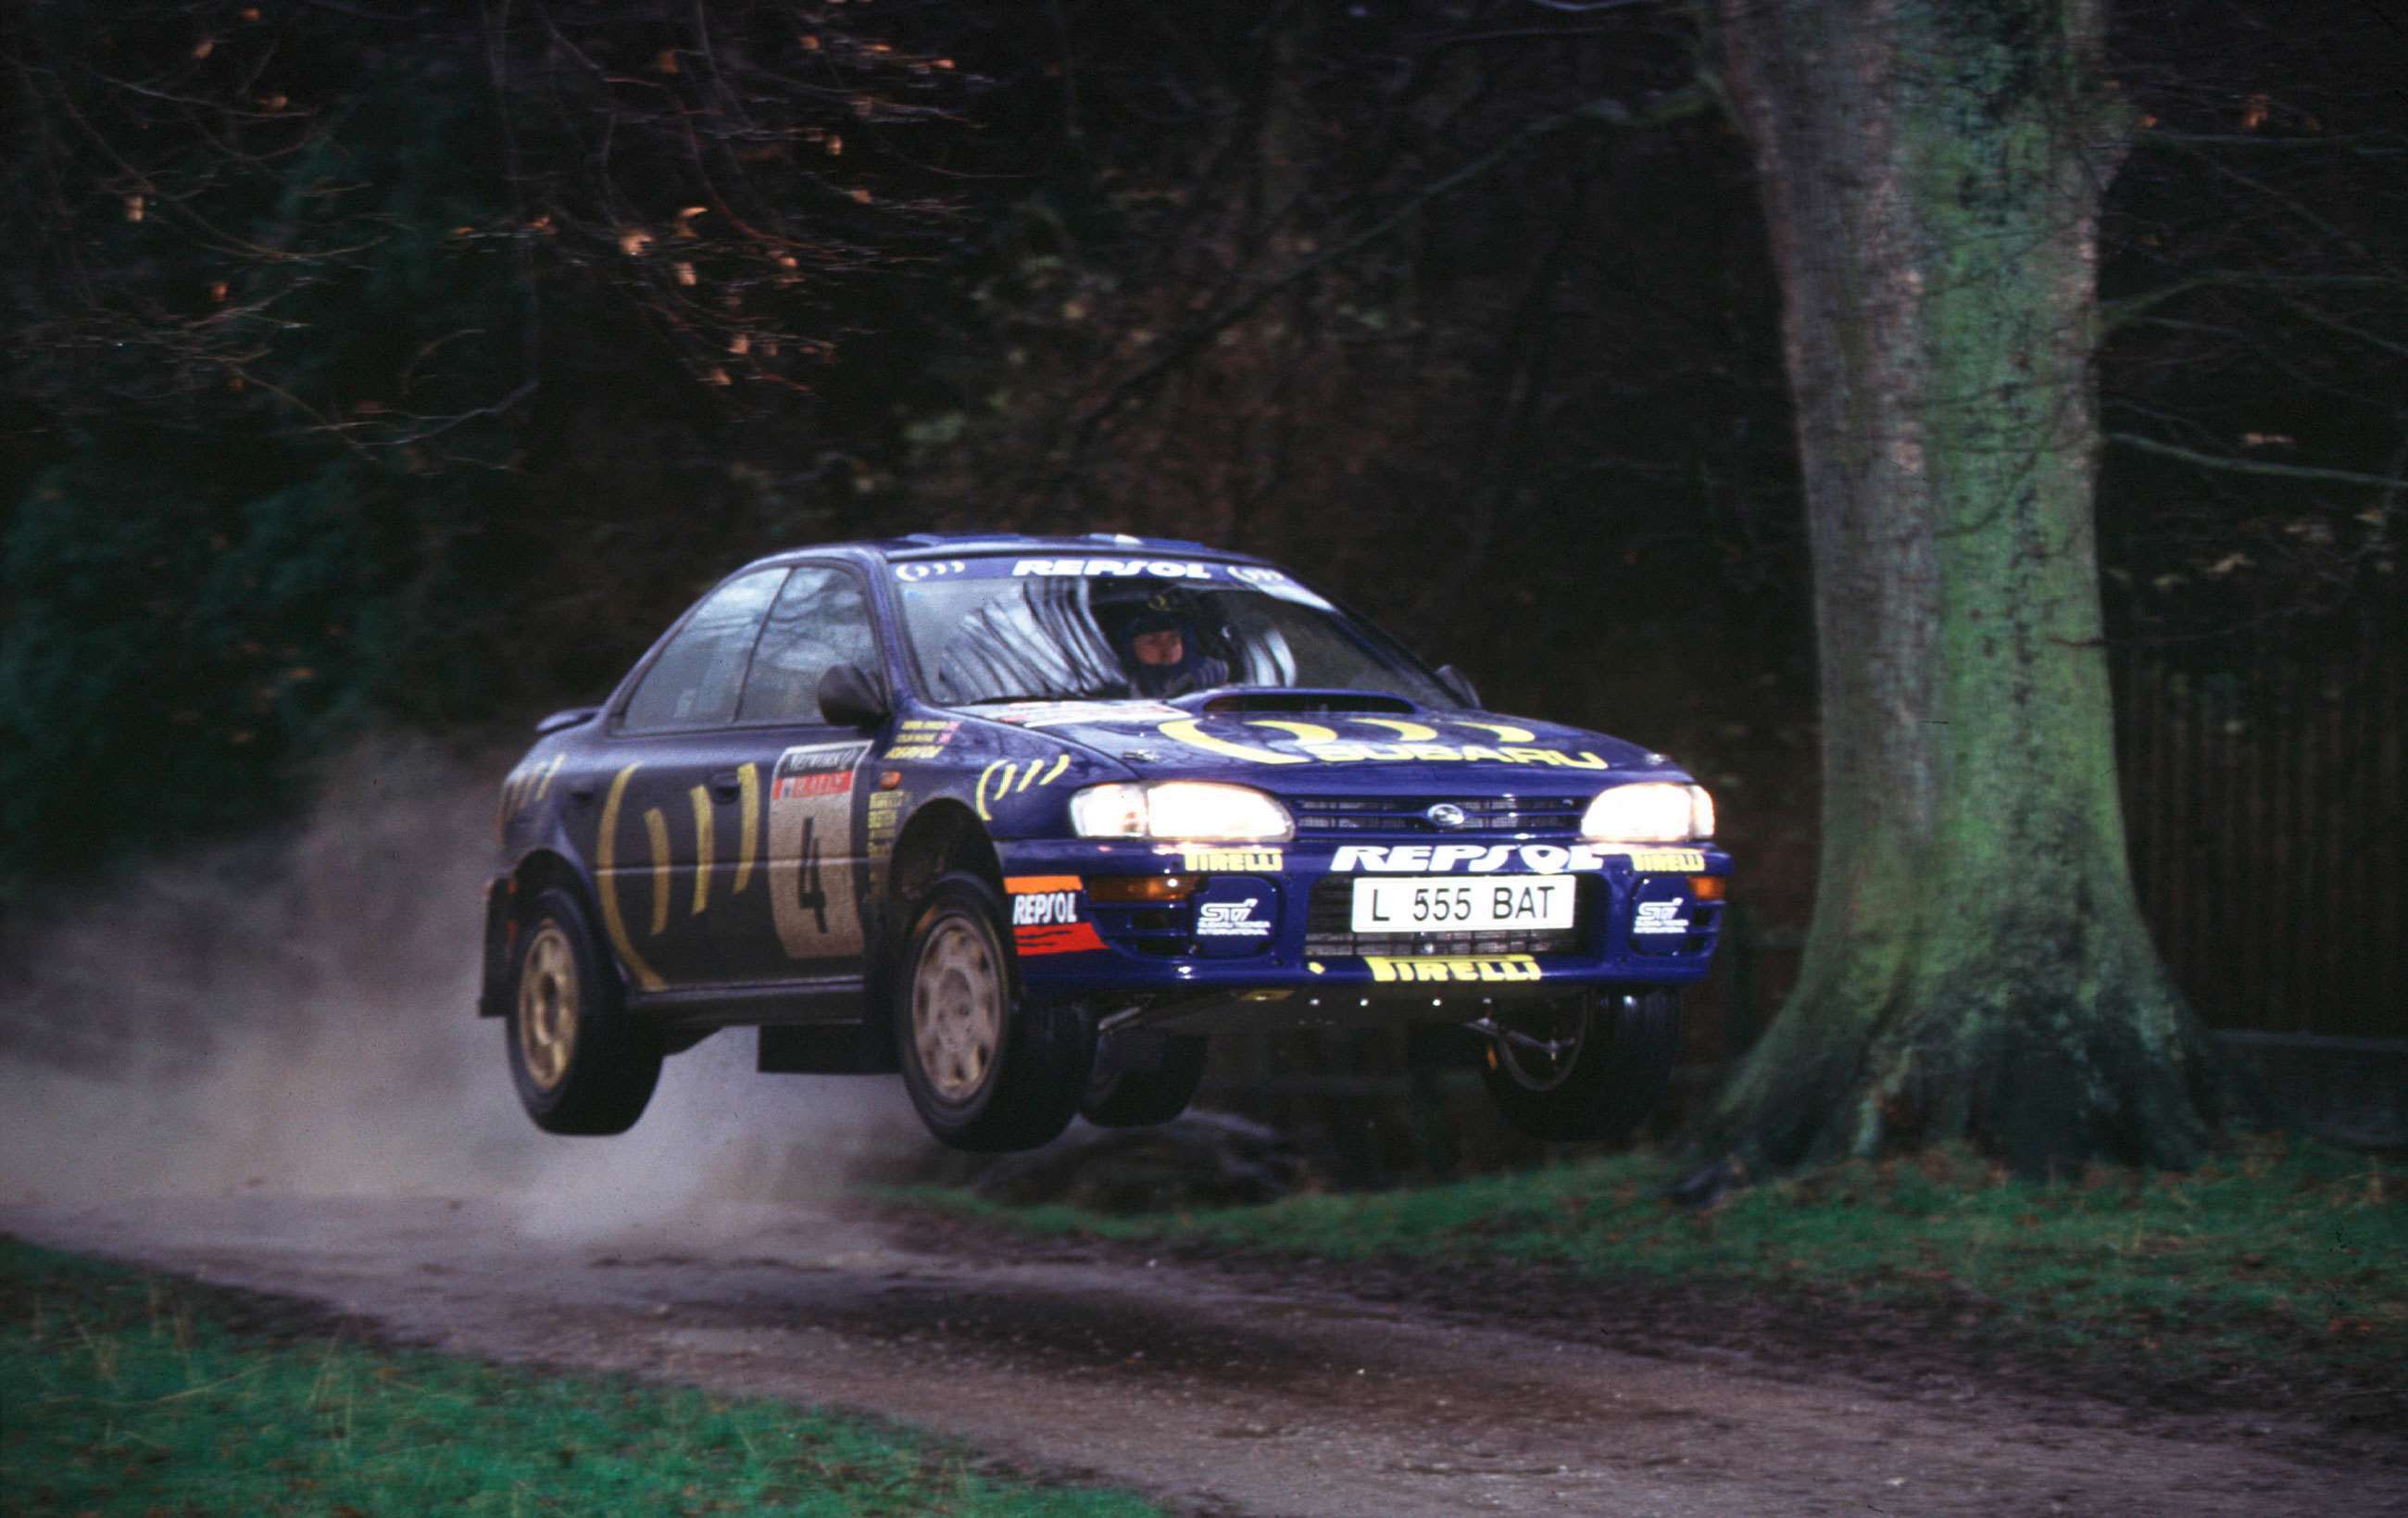 78mm-rally-sprint-wrc-subaru-impreza-555-1995-rac-rally-gb-colin-mcrae-derek-ringer-lat-motorsport-images-goodwood-27012020.jpg